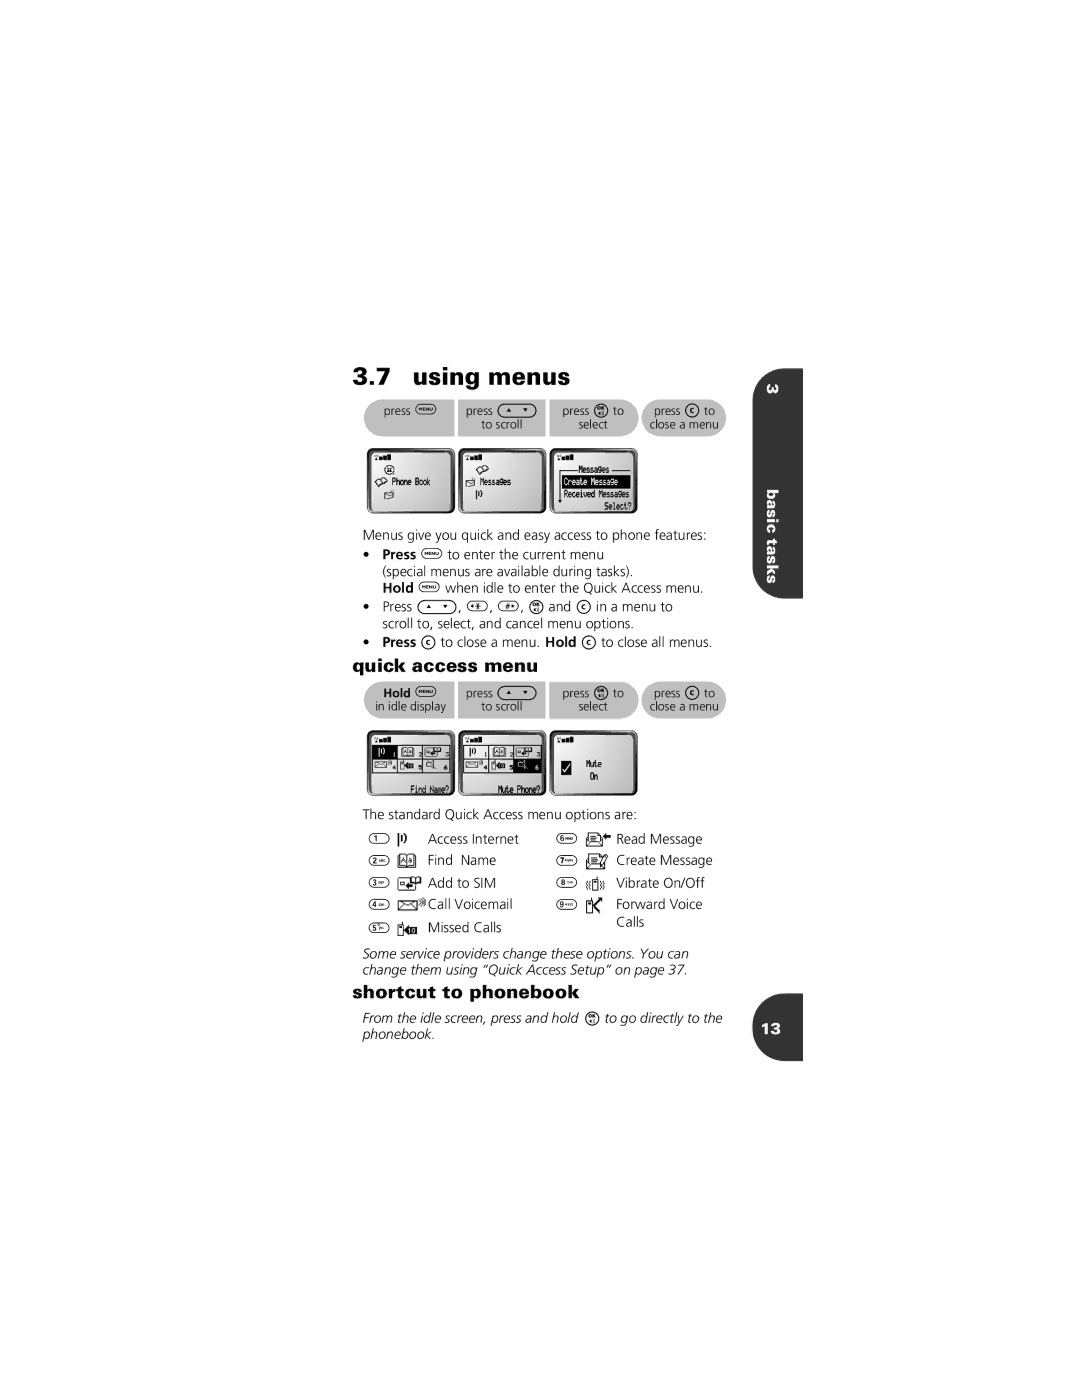 Motorola 2001 Portable Cell Phone manual Using menus, Quick access menu, Shortcut to phonebook, Basic tasks 